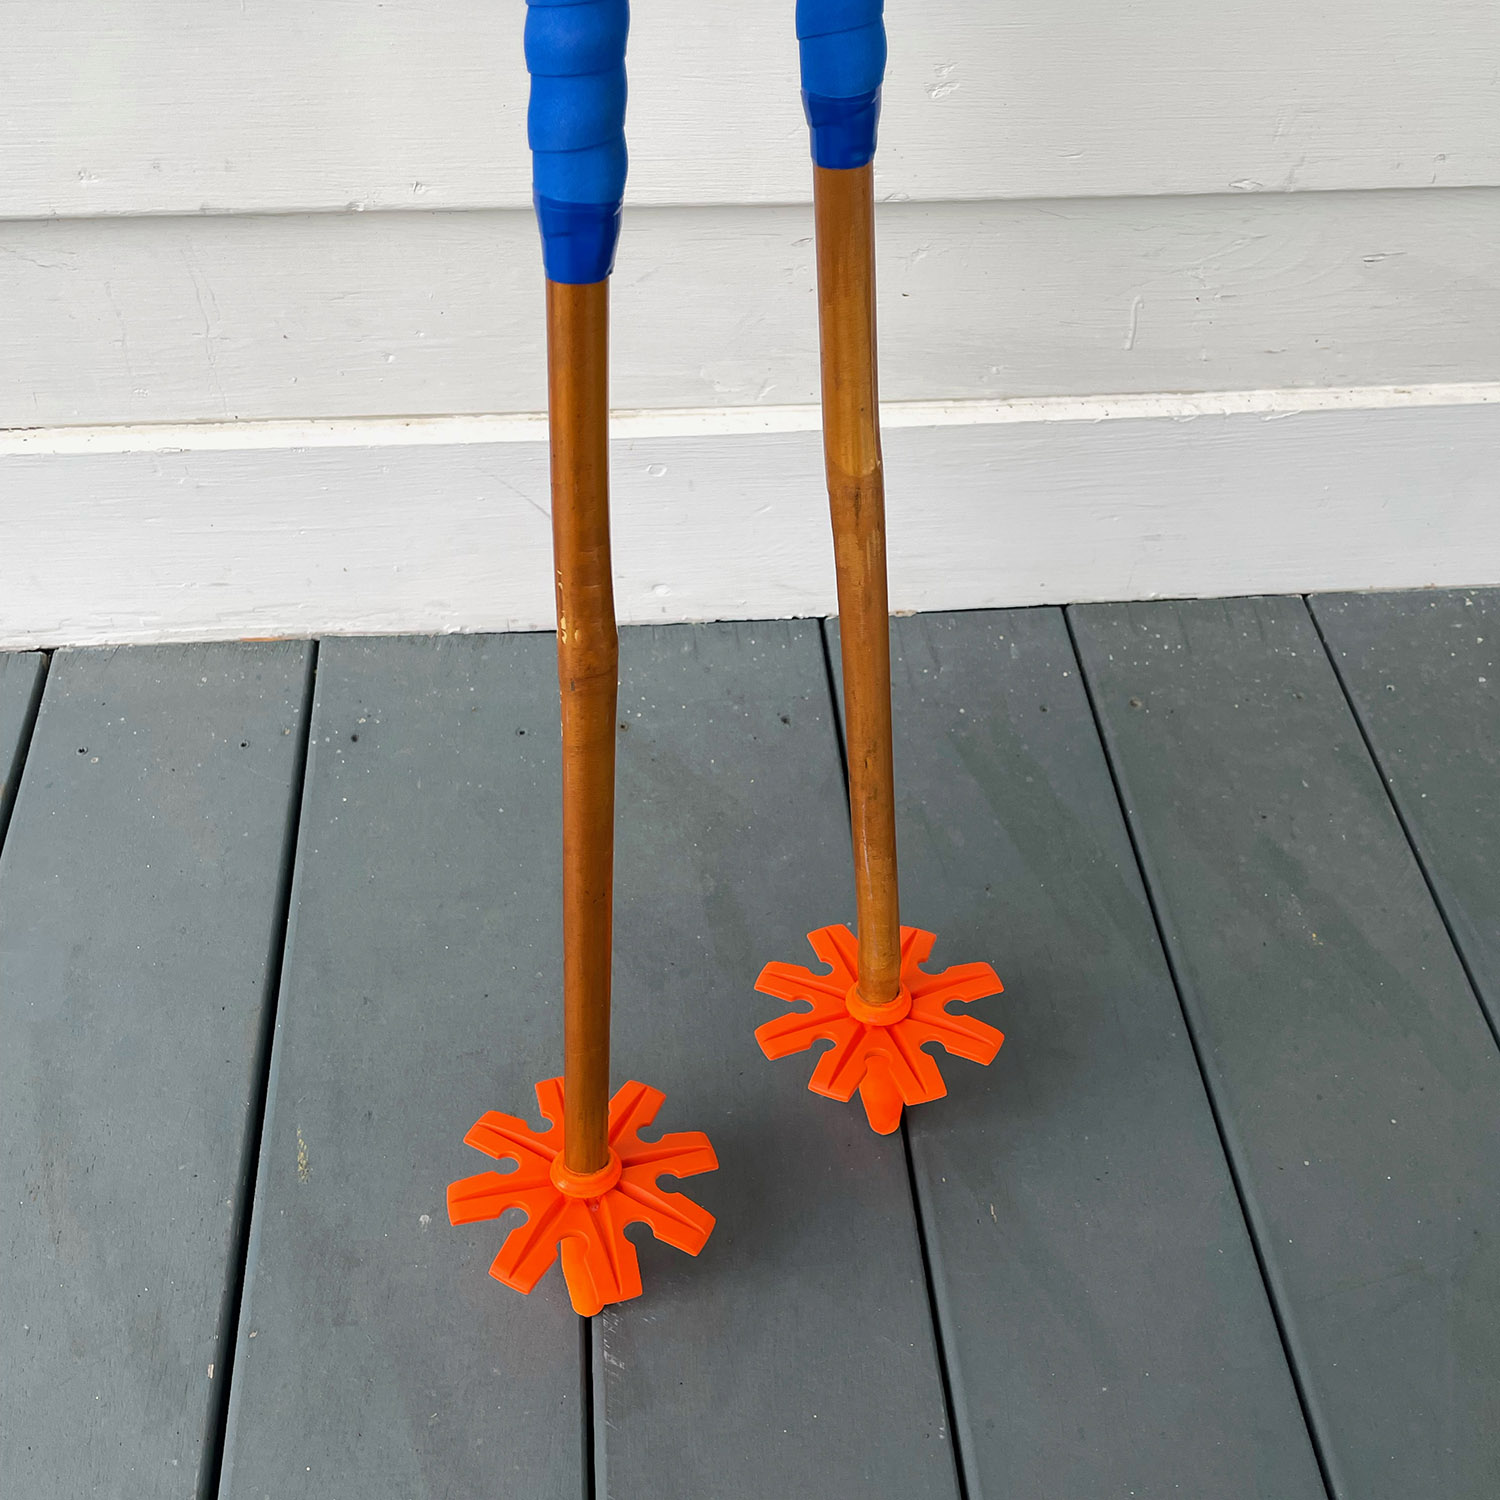 Bamboo ski poles with orange 100 mm baskets from Tehnomat.